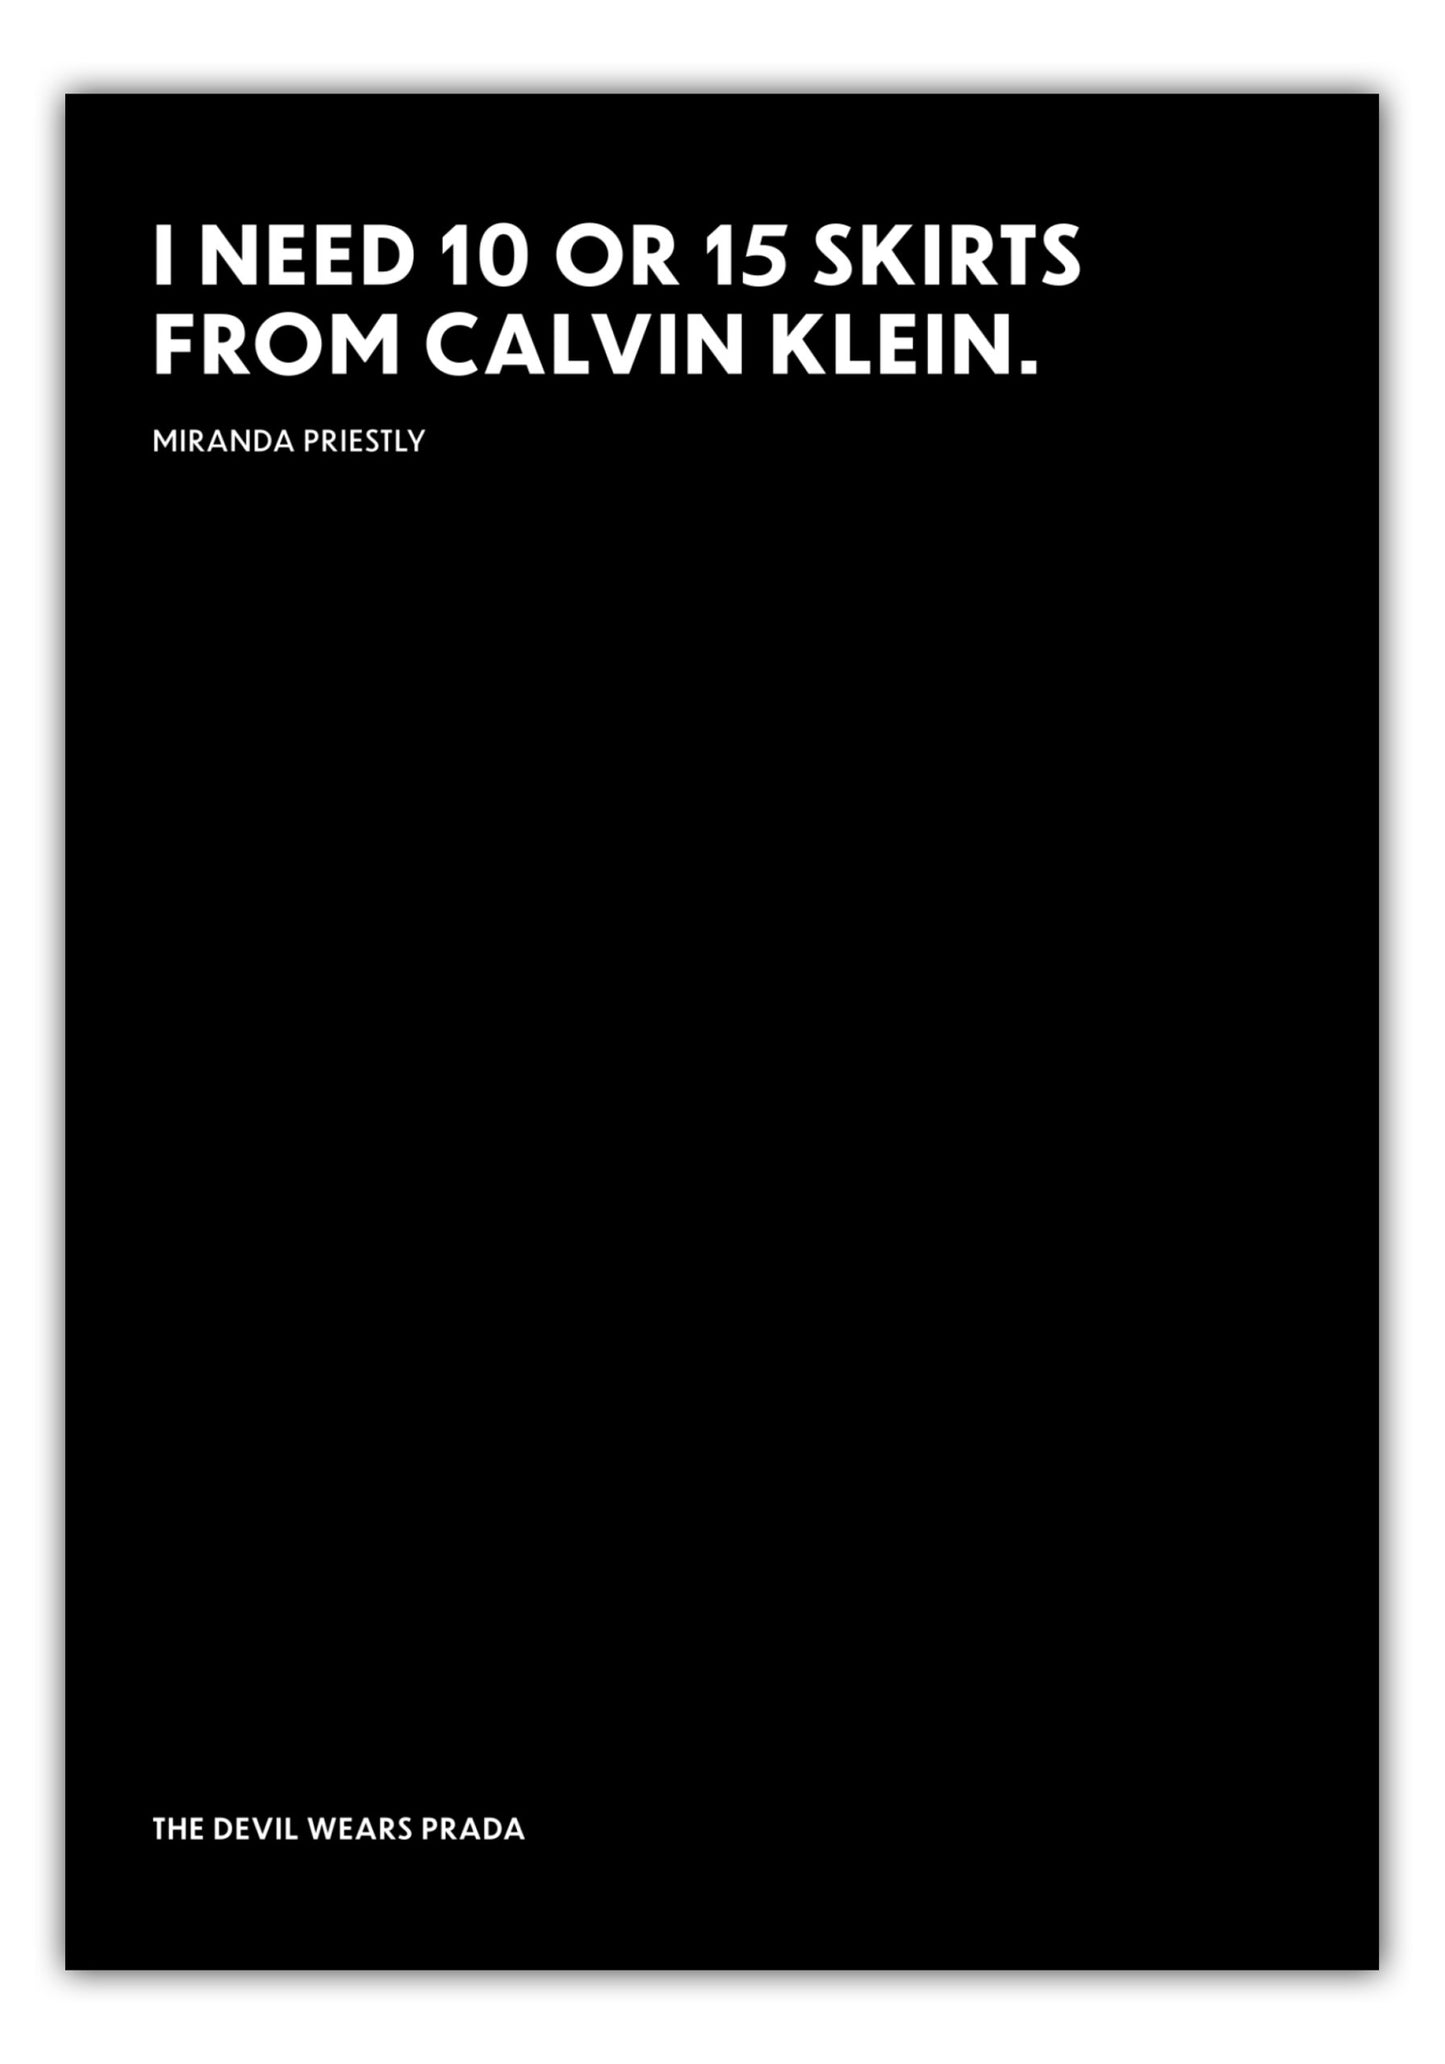 Poster I need 10 or 15 skirts from Calvin Klein. - Miranda Priestly - The Devil Wears Prada (Der Teufel trägt Prada)